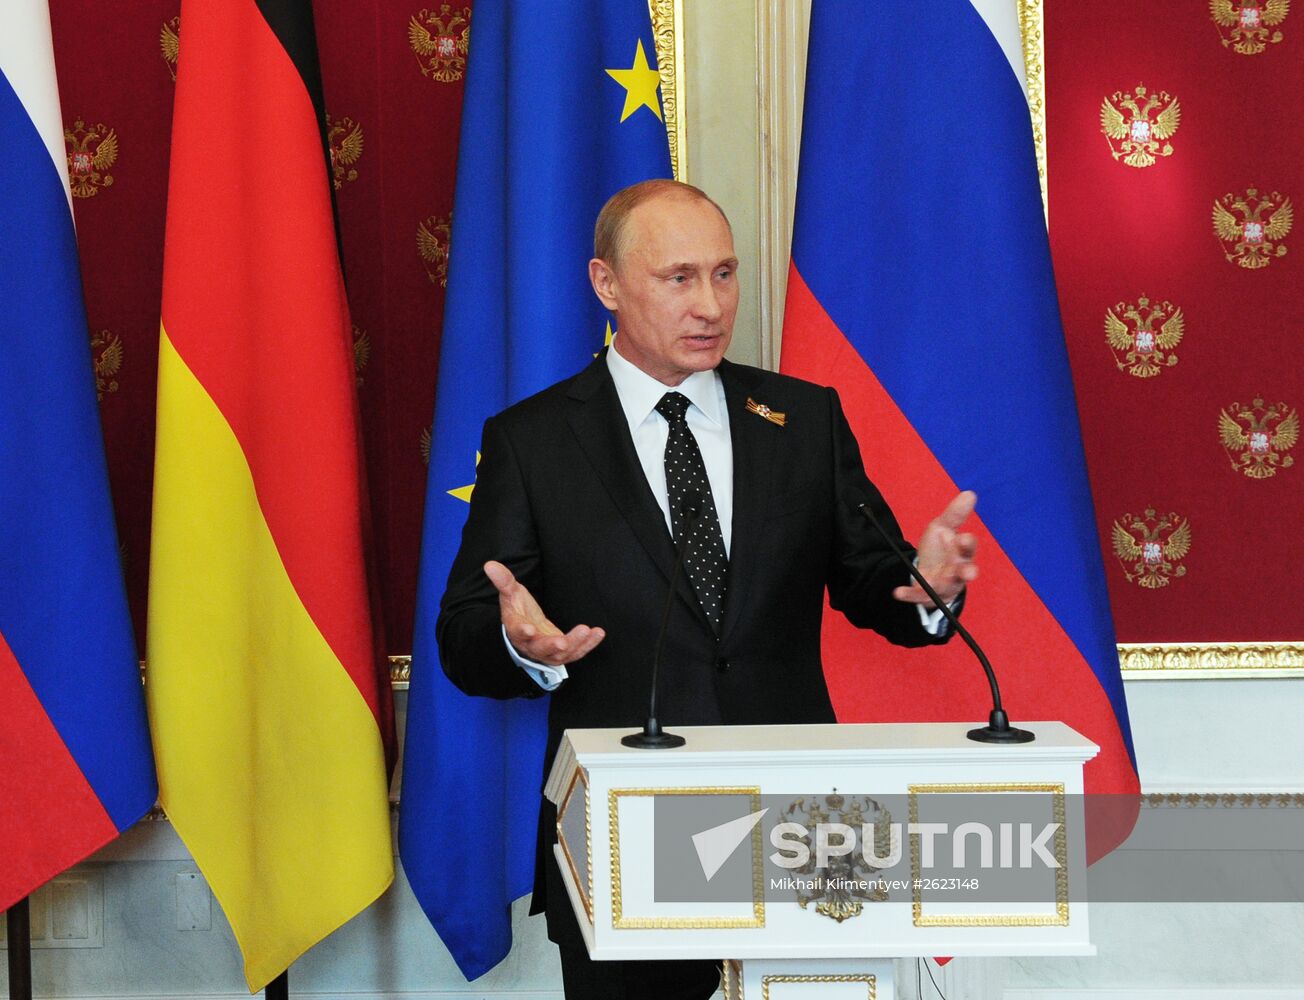 Vladimir Putin and Angela Merkel hold joint news conference